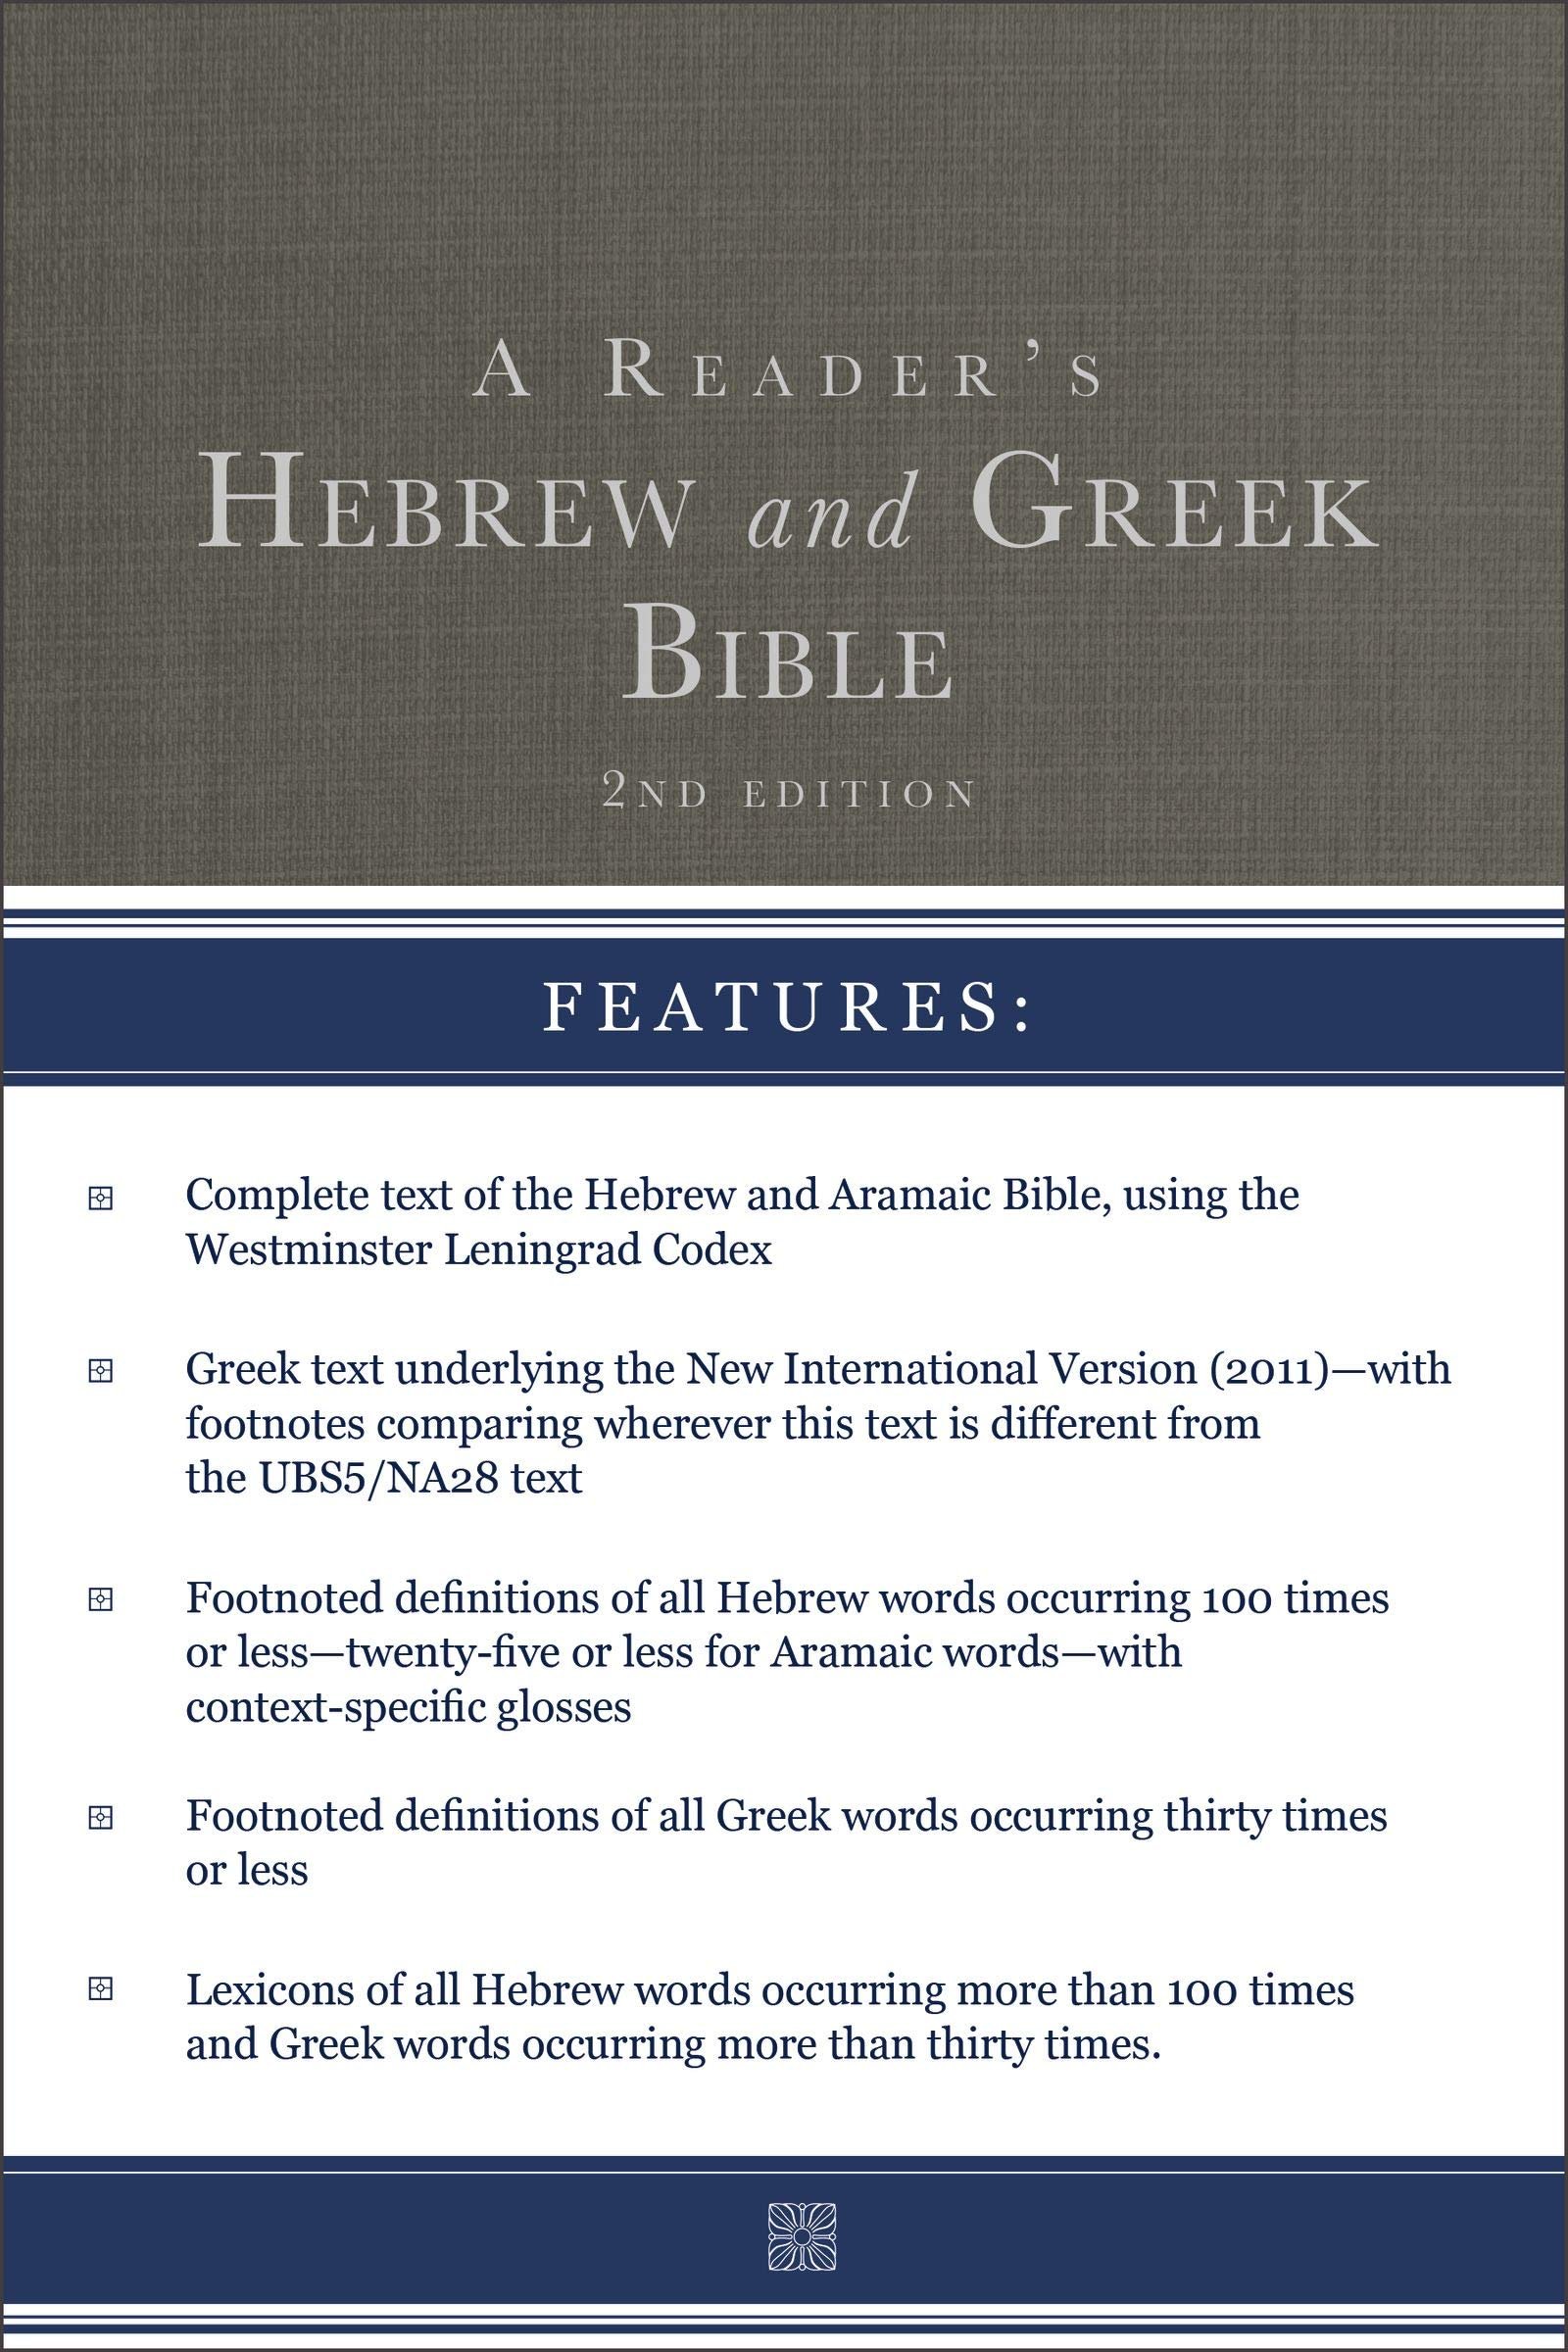 Reader's Hebrew and Greek Bible